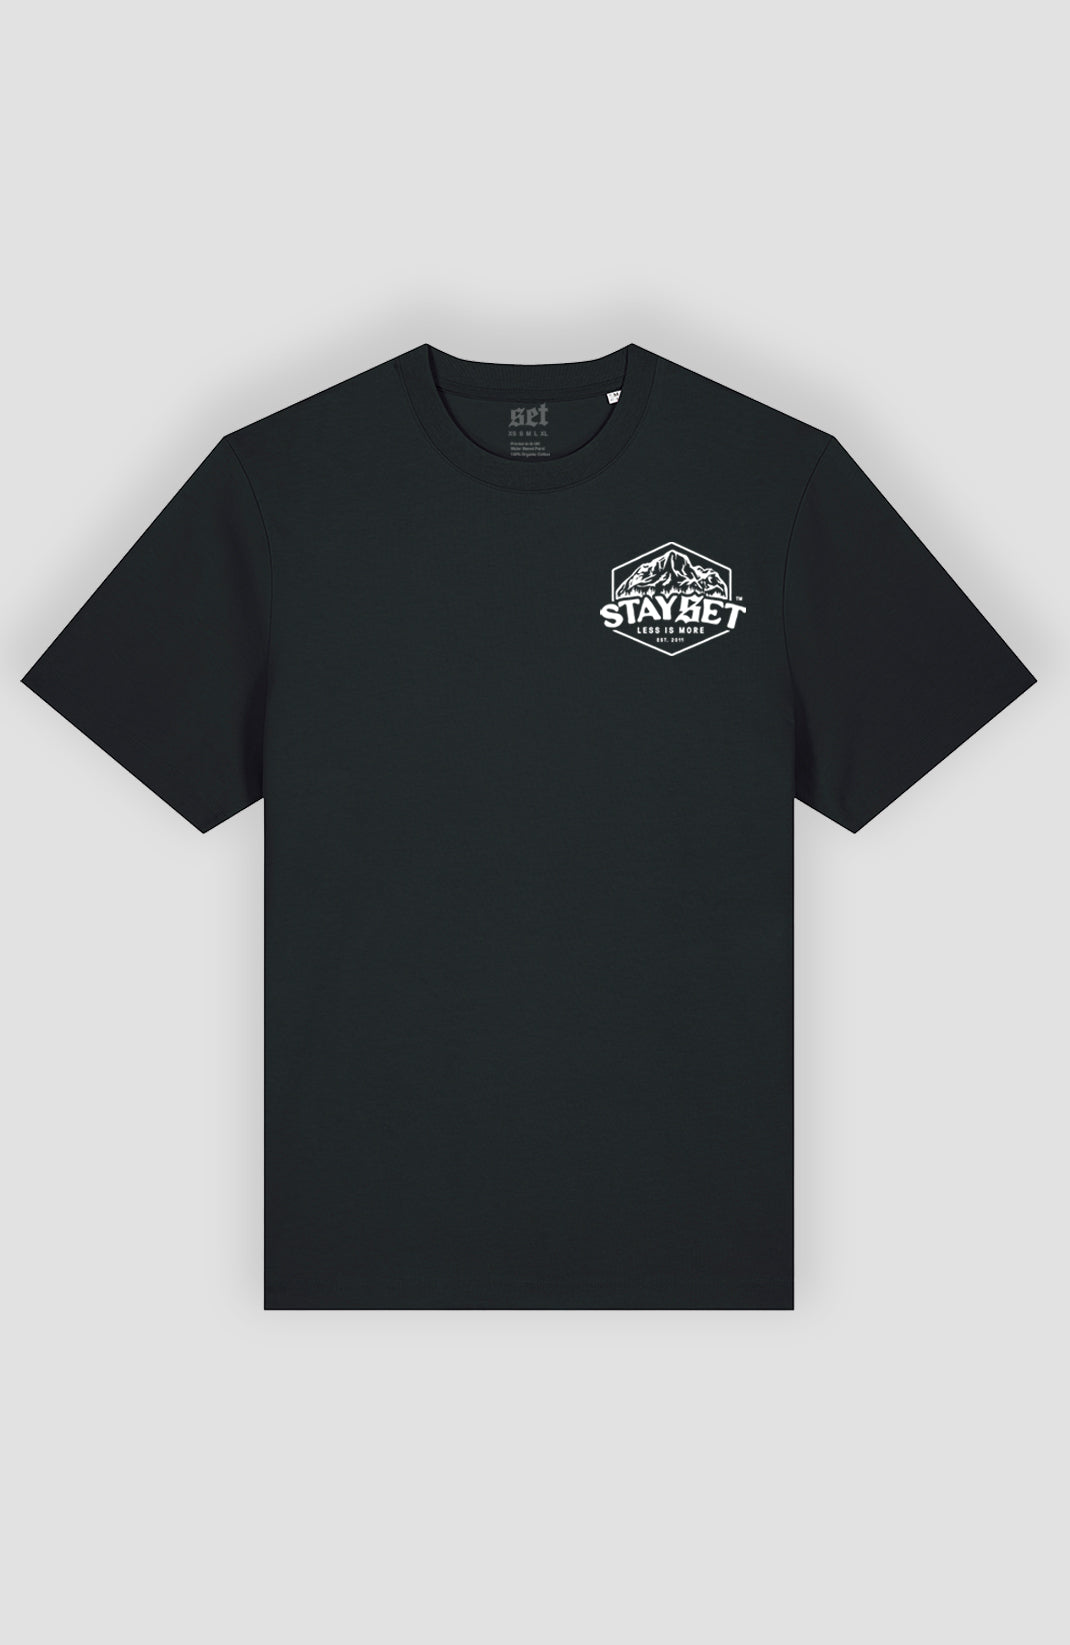 Stayset Mountain T-shirt - Black